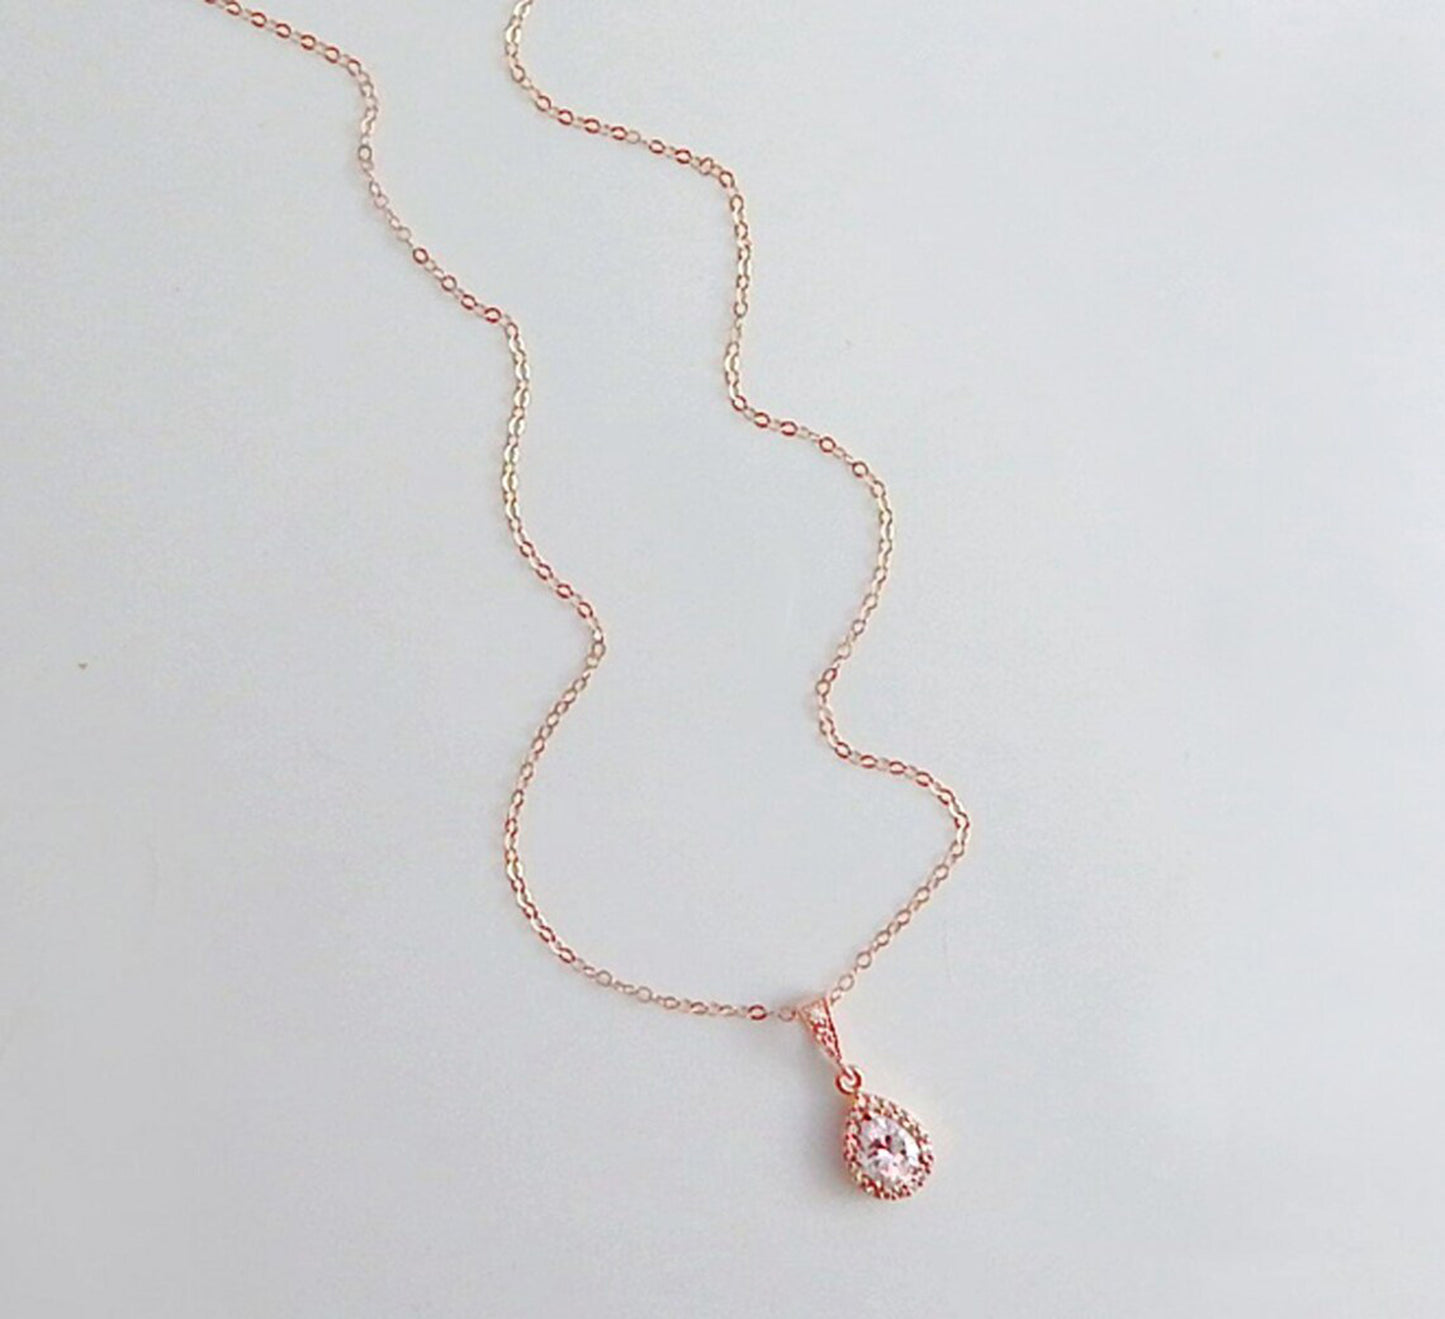 Rose gold necklace with teardrop diamond CZ pendant on a plain white background.